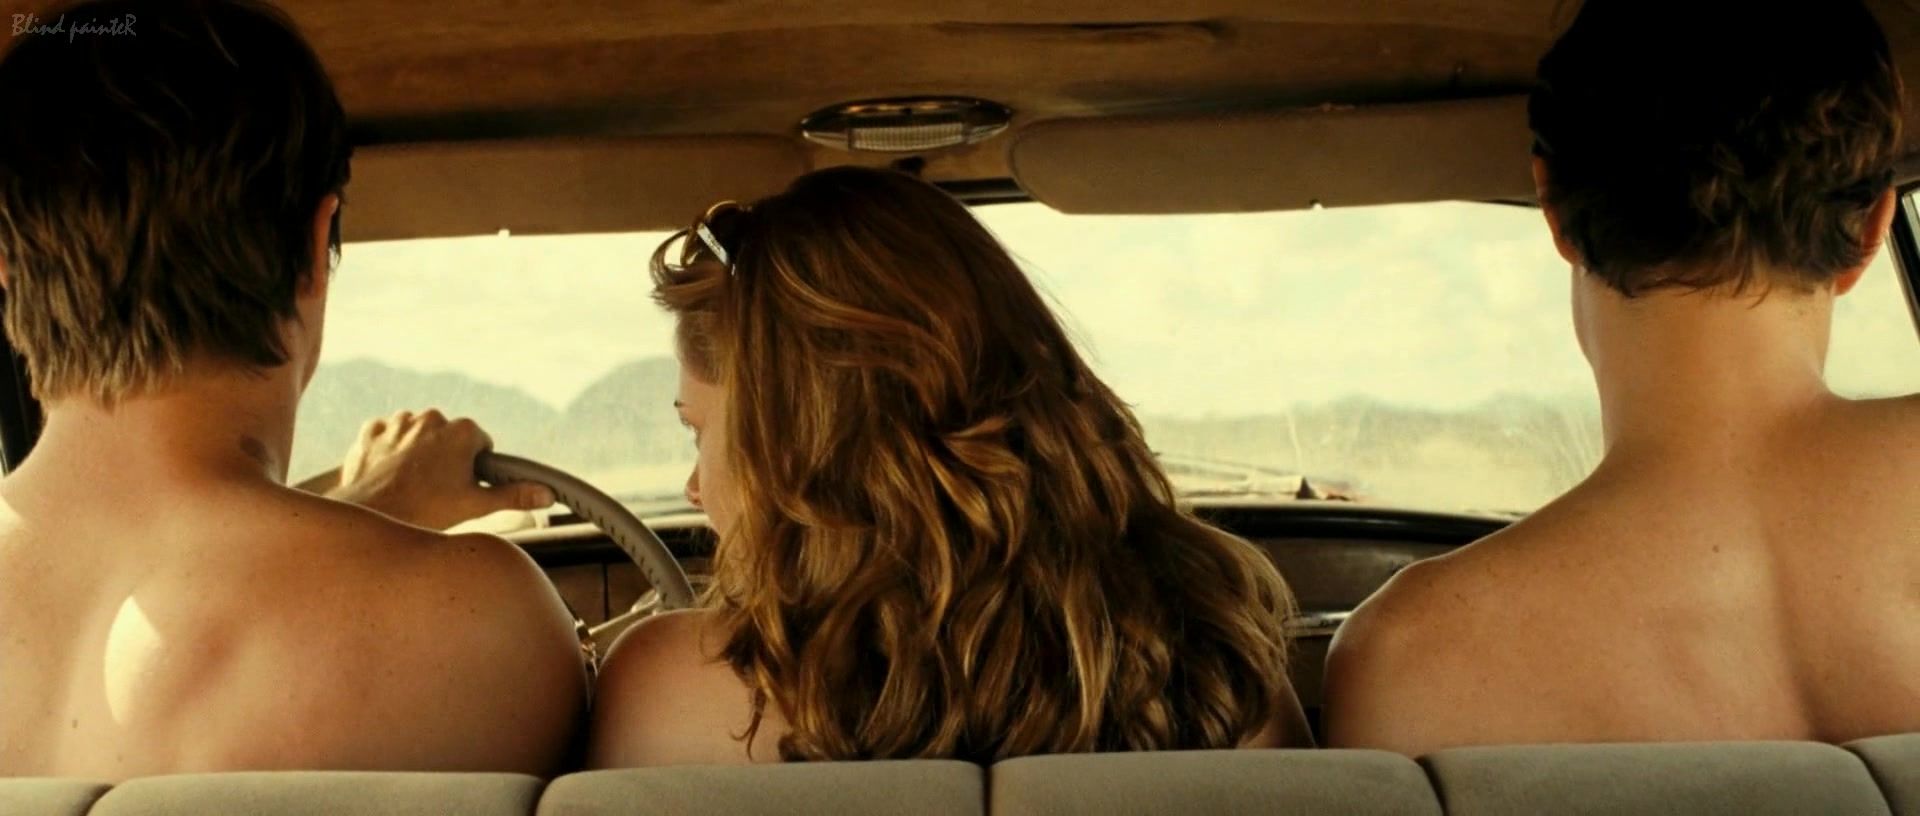 Retro Kristen Stewart nude - On The Road S1E1 GigPorno